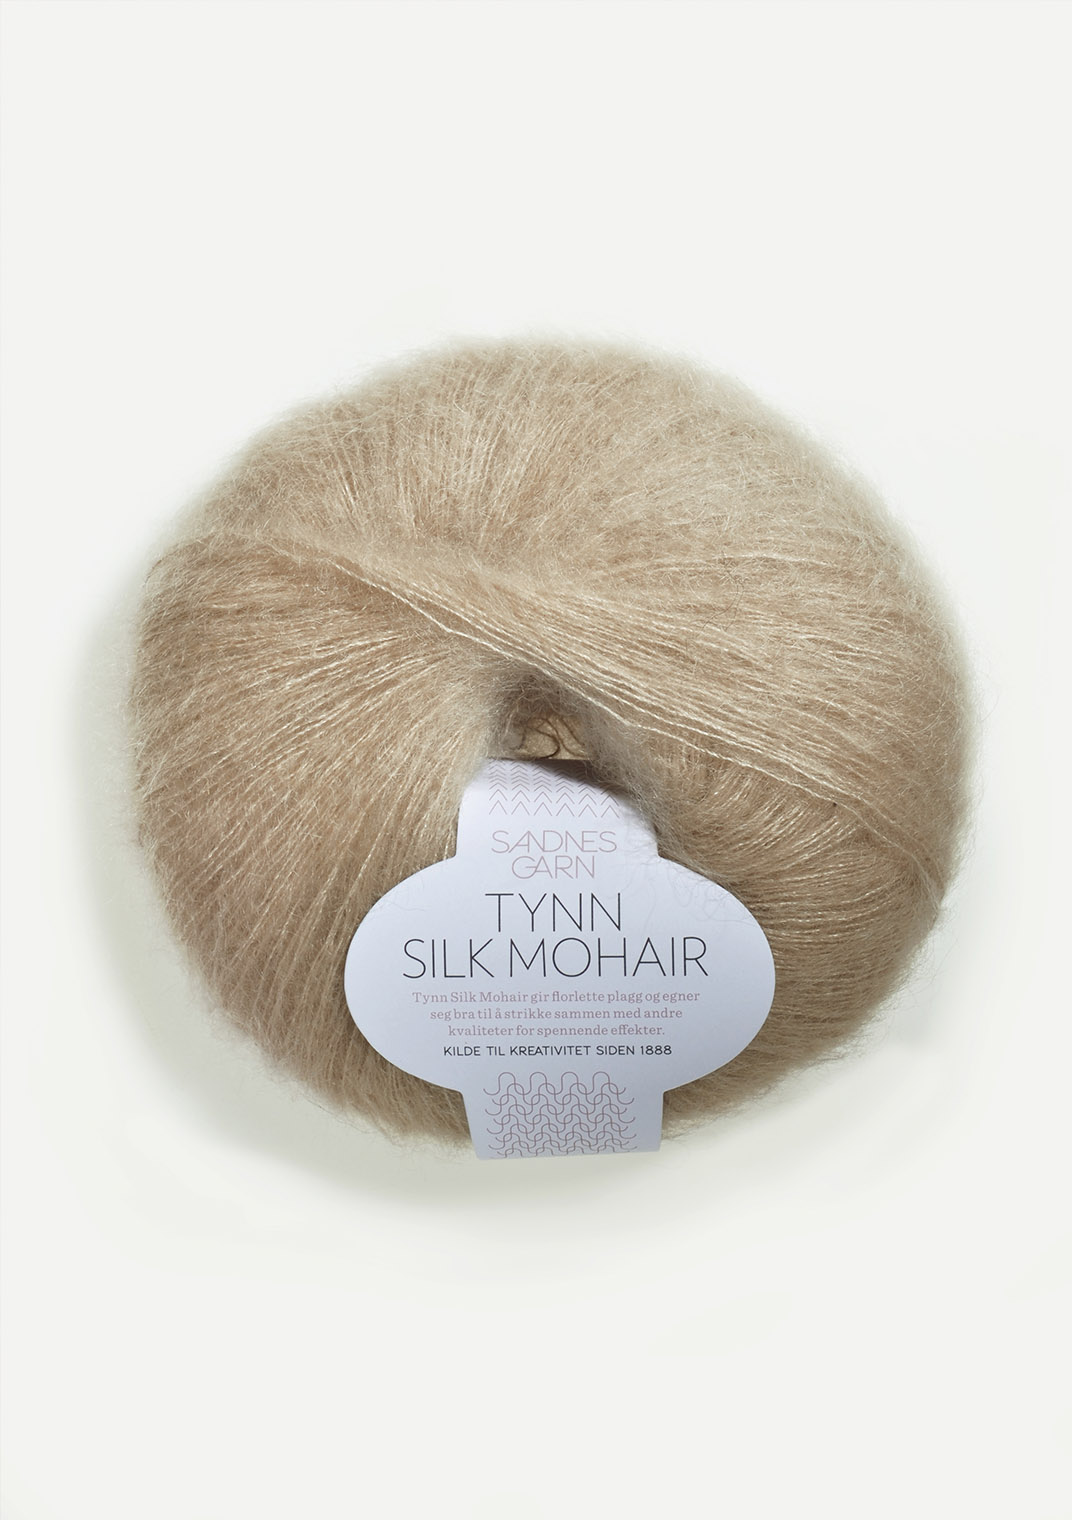 Tynn Silk Mohair, Light Beige, 3021, Sandnes Garn in USA, Sandnes Garn, Norwegian Yarn from Sandnes Garn, Sandnes Garn in Bay Area California